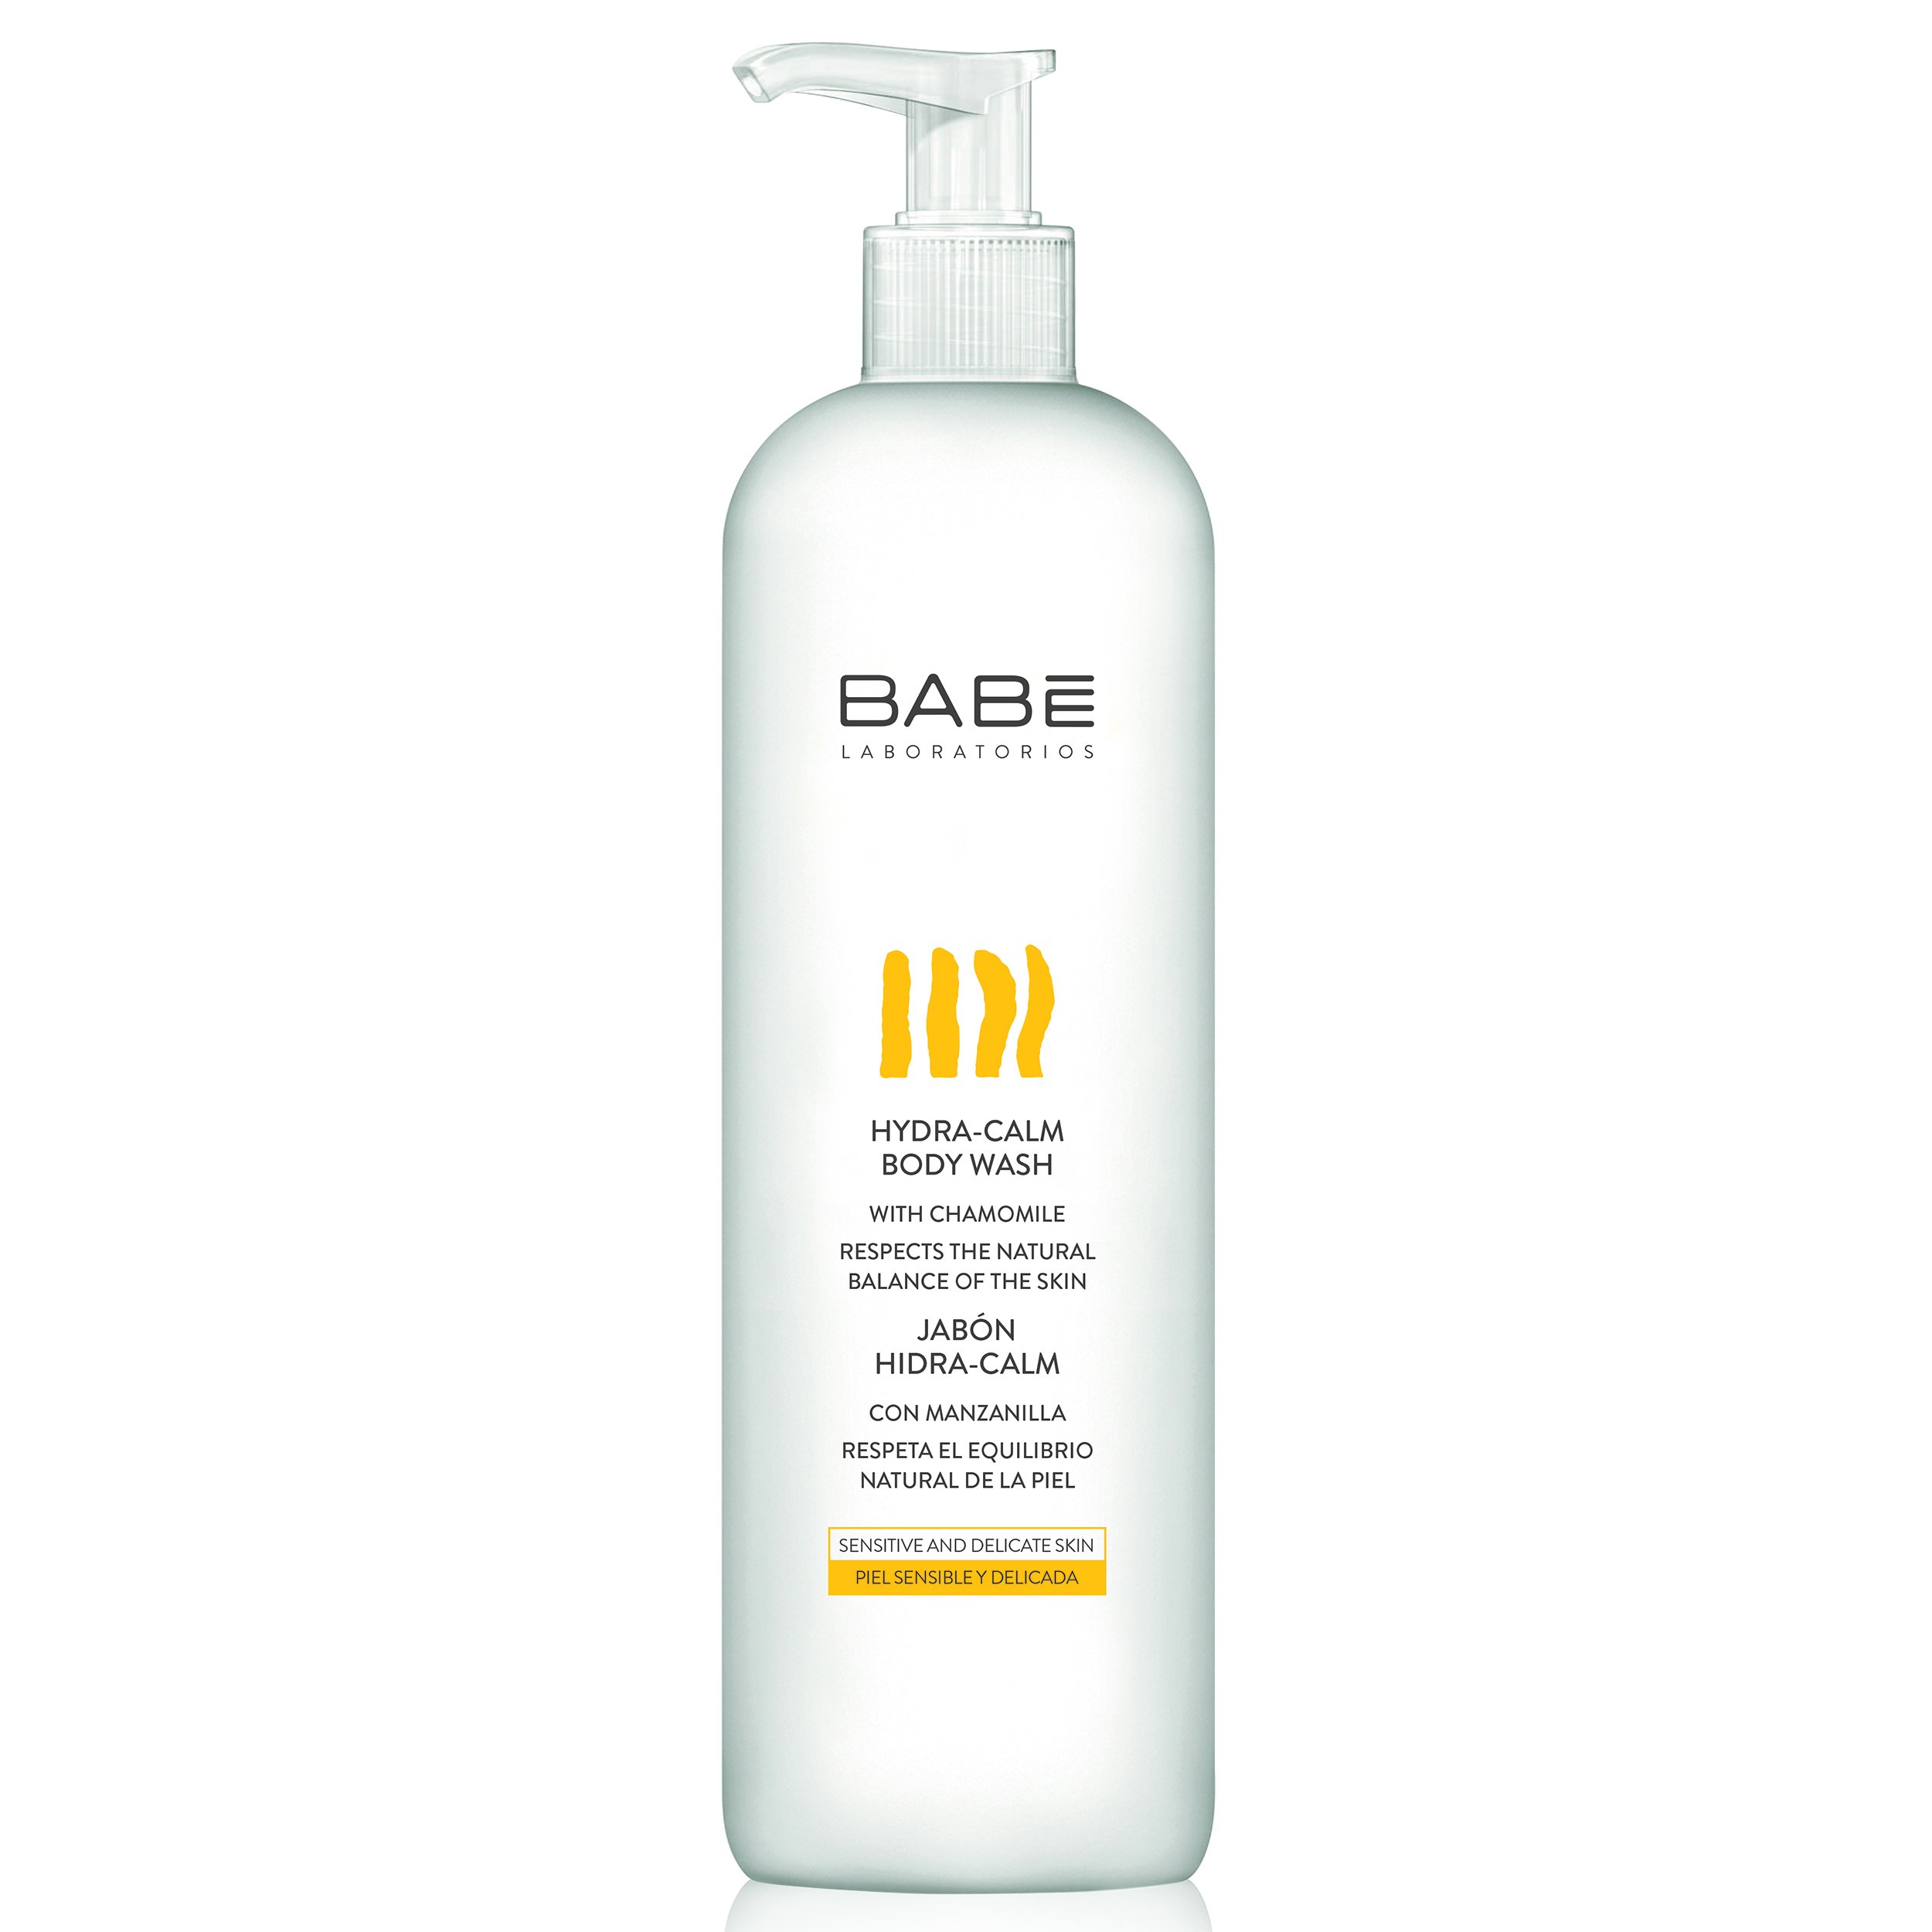 Babe Body Hydra-Calm Wash Απαλό Αφρόλουτρο με Μεταξένια Υφή για την Καθημερινή Υγιεινή της Ευαίσθητης Επιδερμίδας 500ml